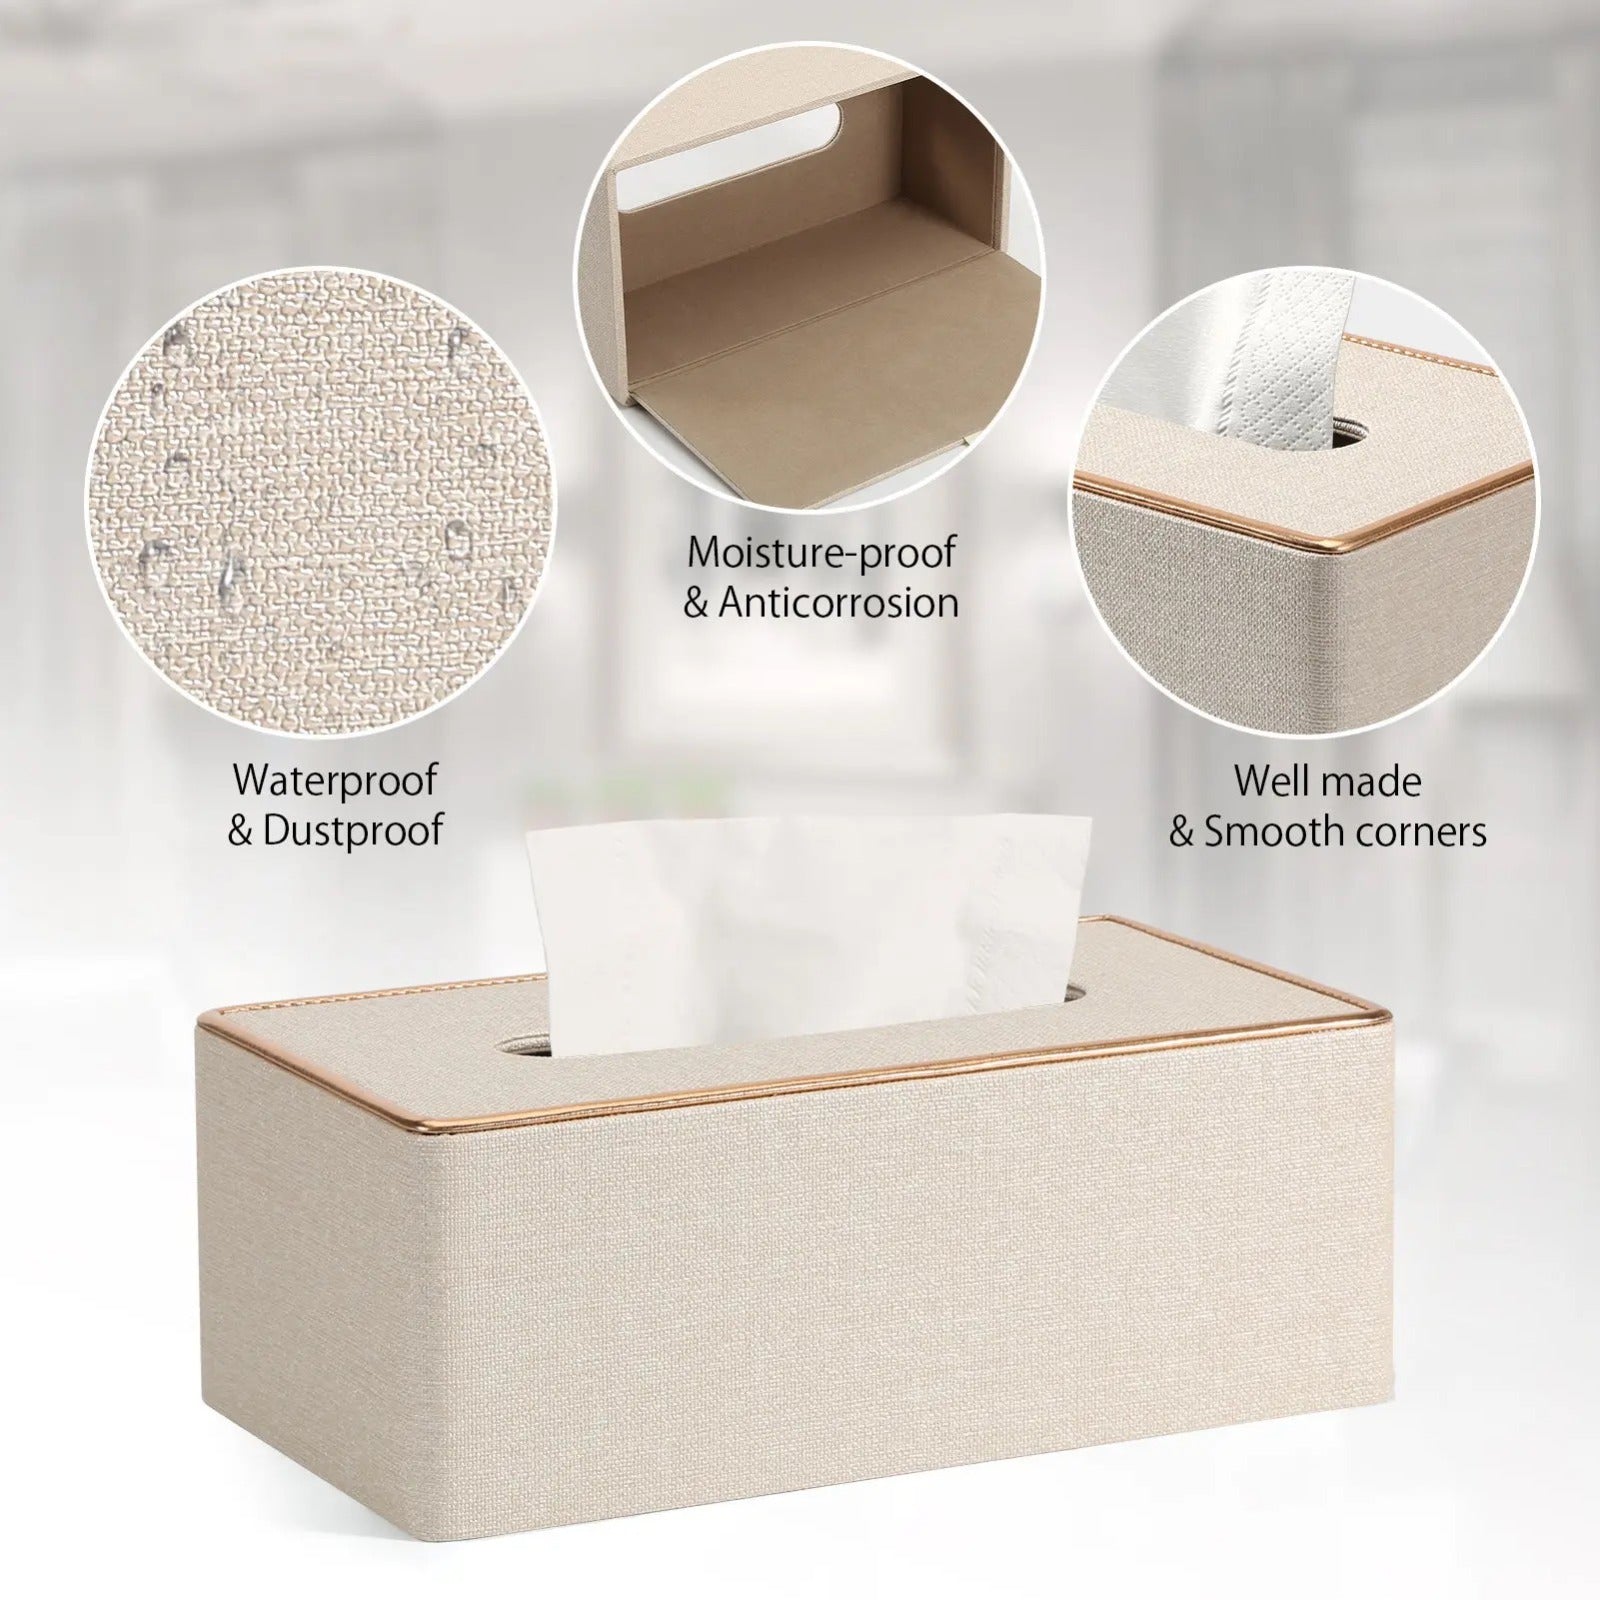 Rectangular Tissue Box Holder showcasing its features